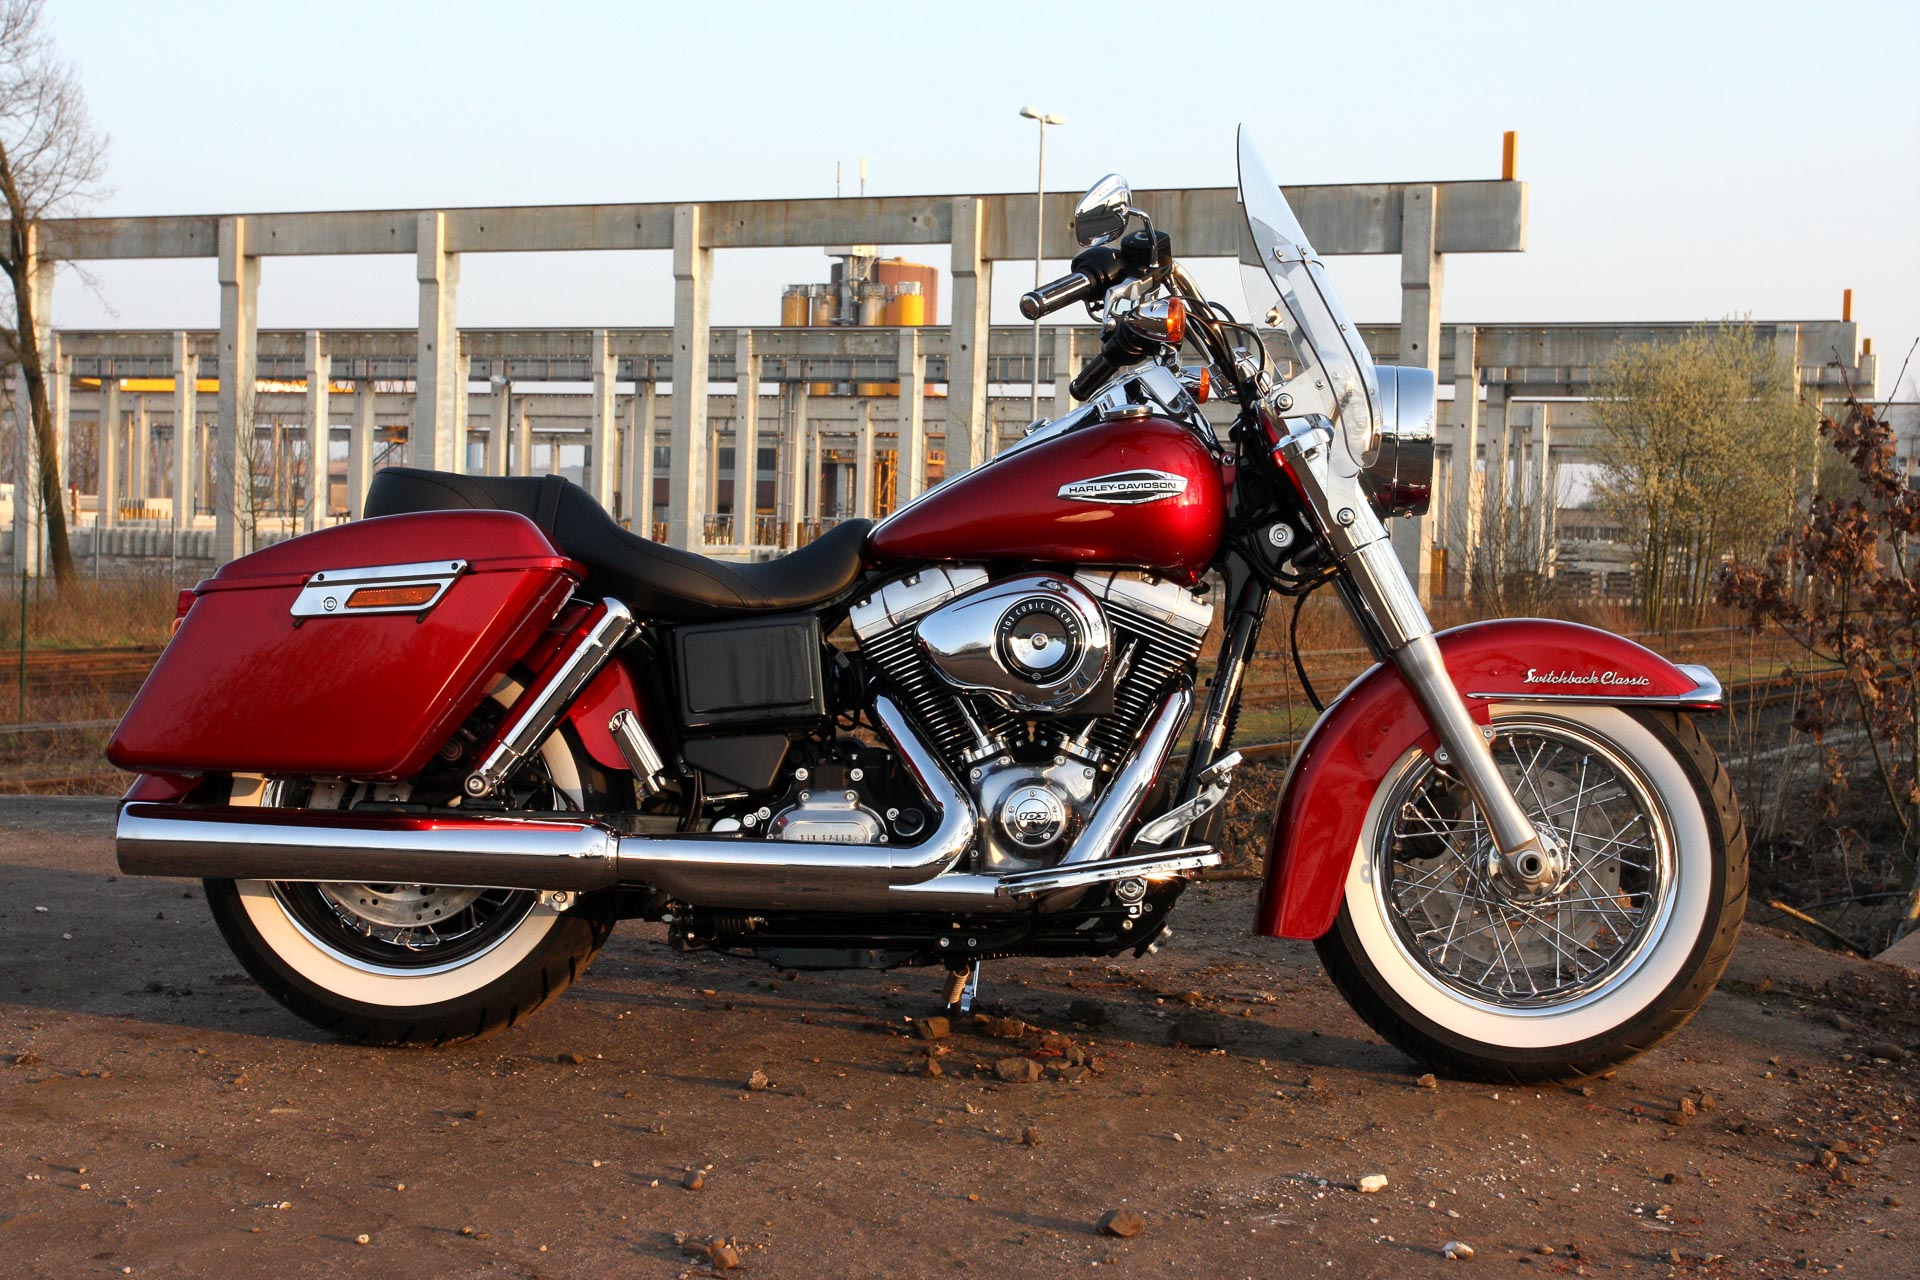 Harley-Davidson P&A 2012 - Part 2 by Thunderbike - Issuu